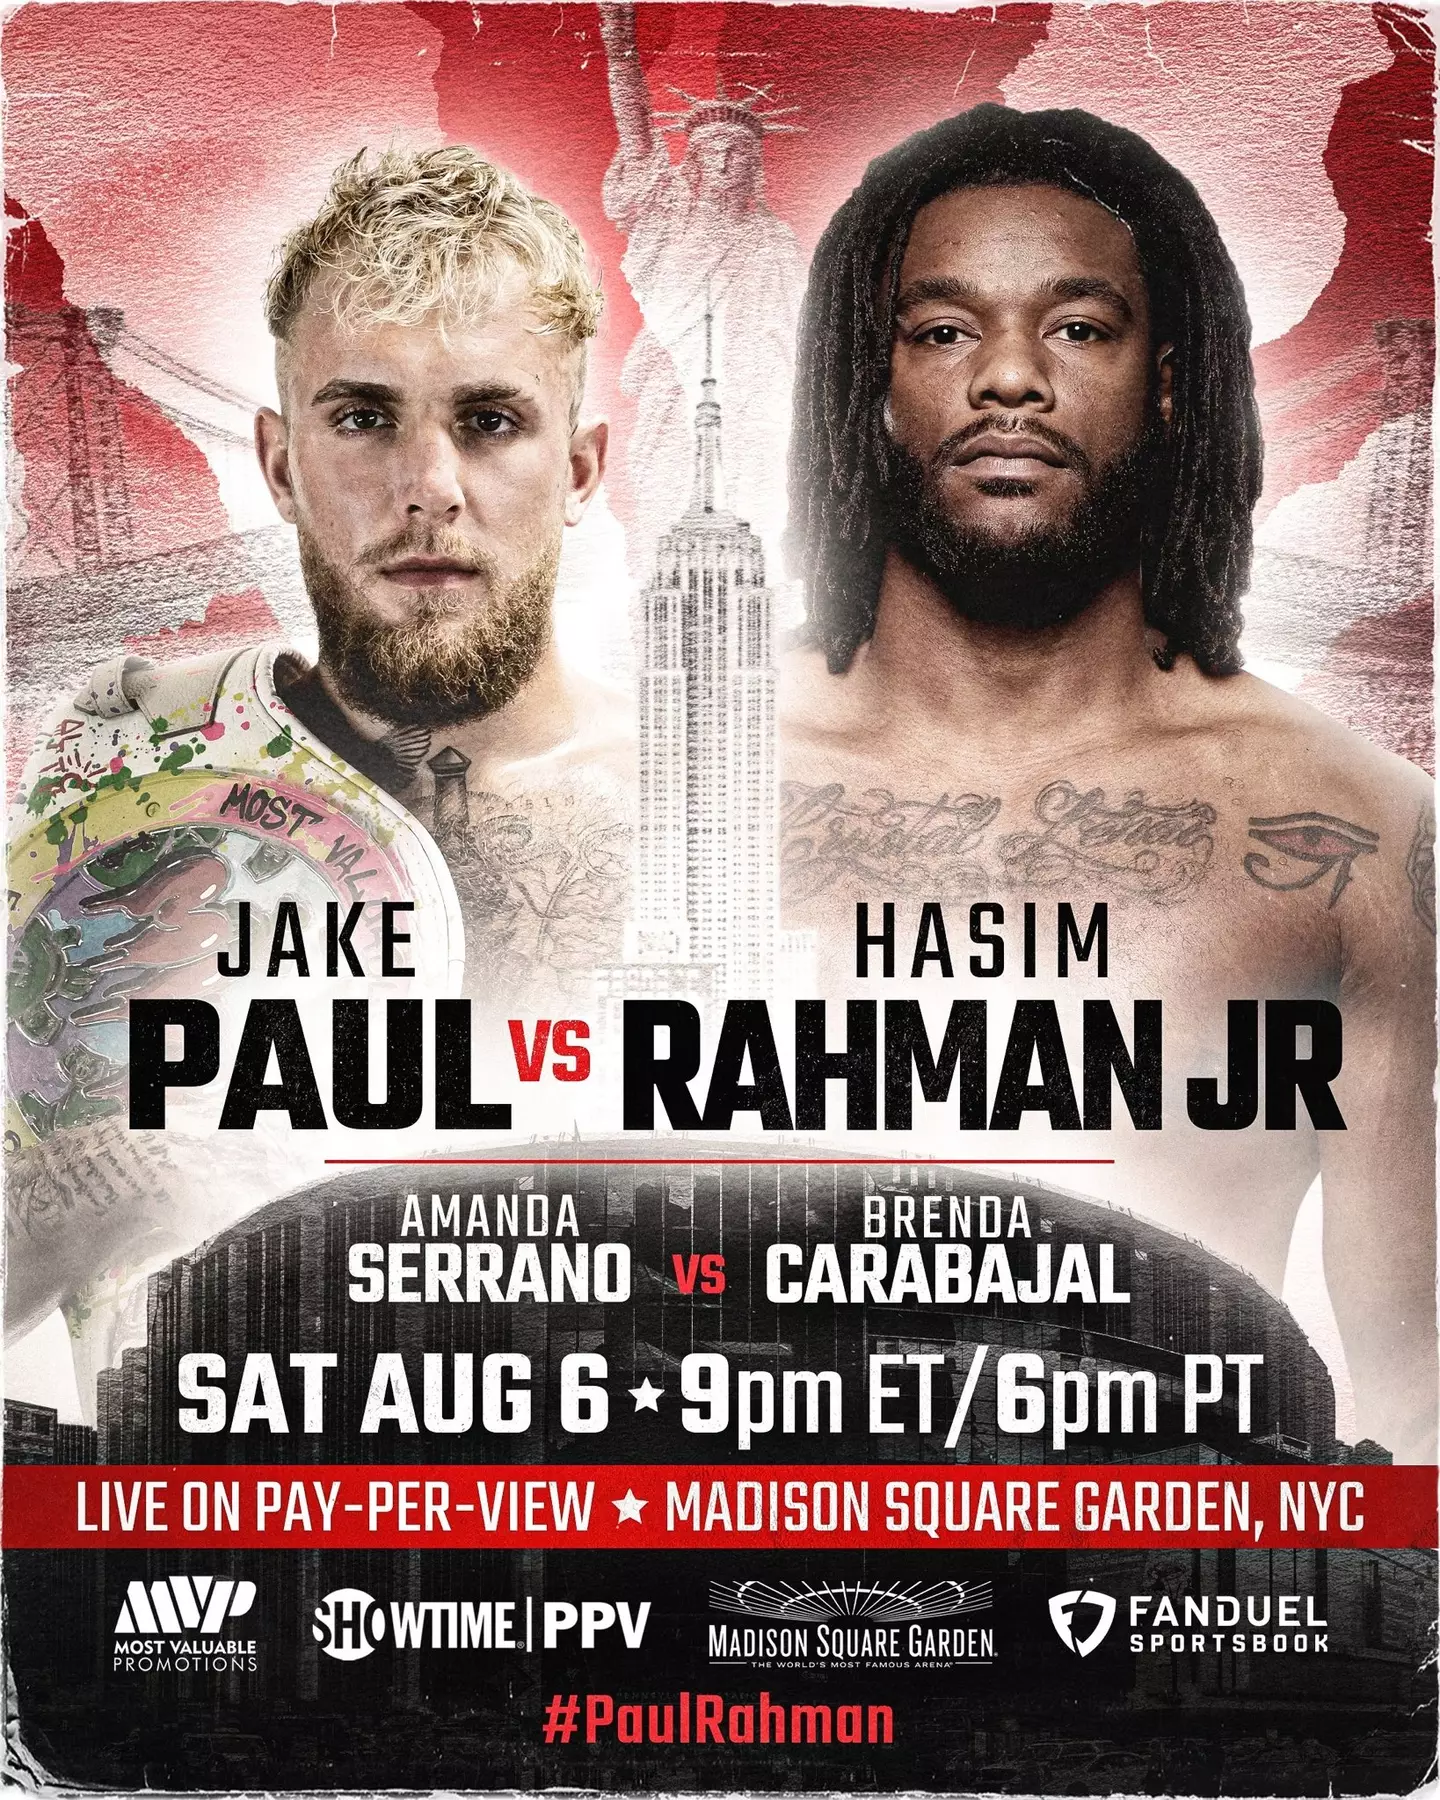 Jake Paul vs Hasim Rahman Jr. takes place on 6 August.